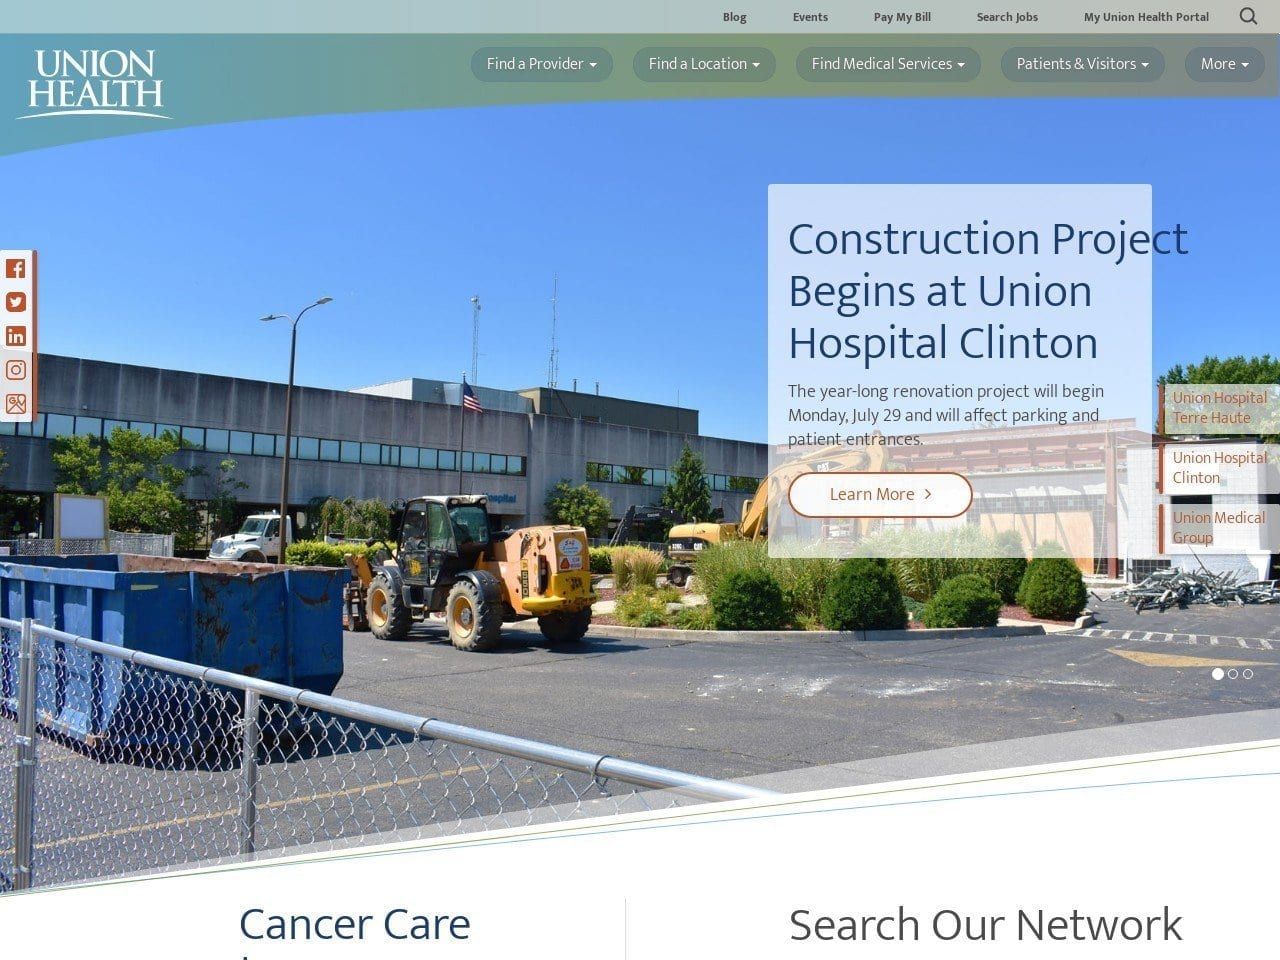 Union Hospital Medical Group Website Screenshot from myunionhospital.org